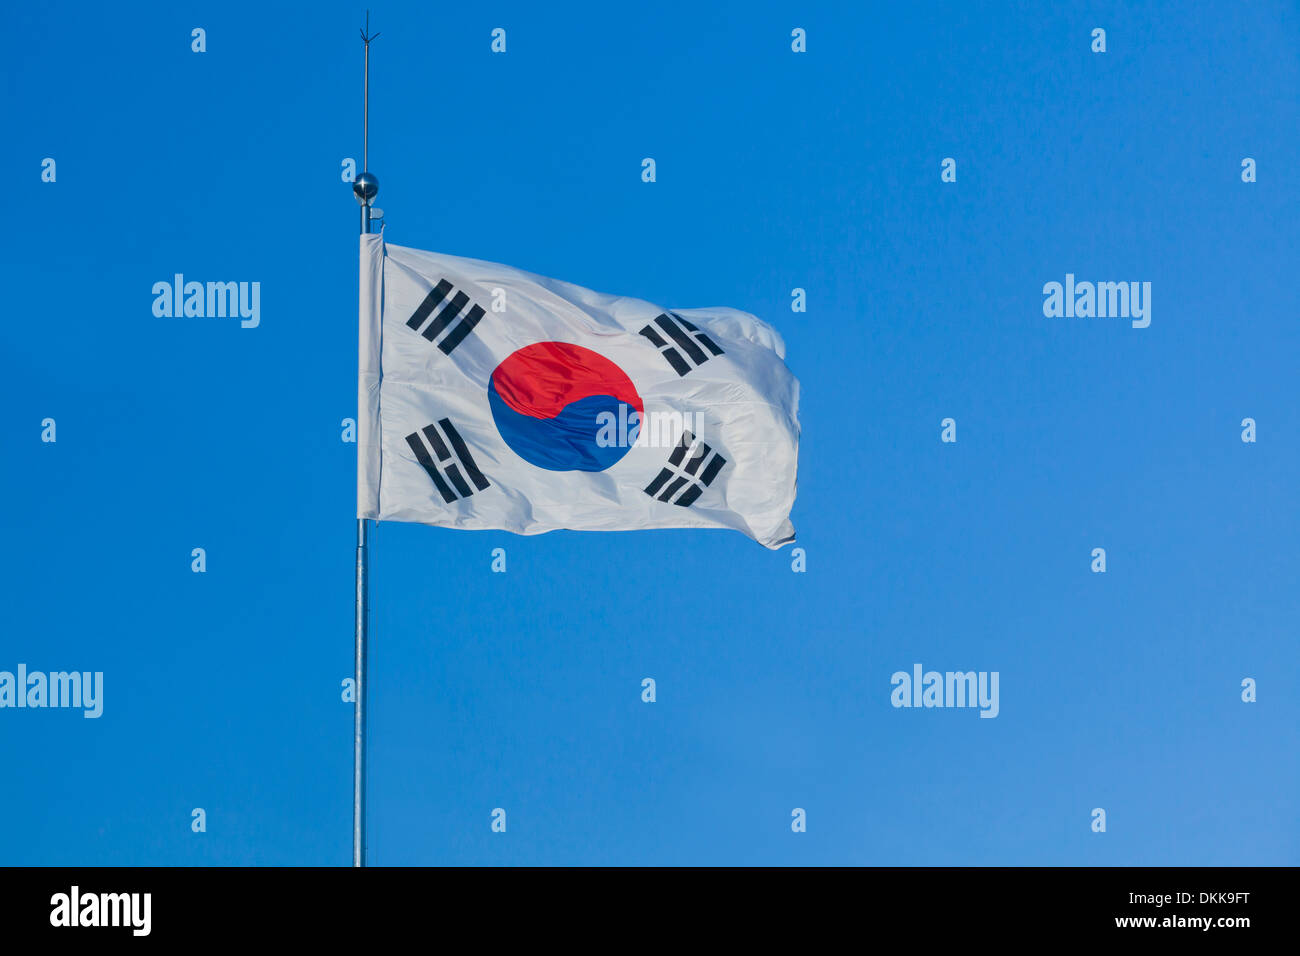 South Korean flag (Taegukgi) - Seoul, South Korea Stock Photo